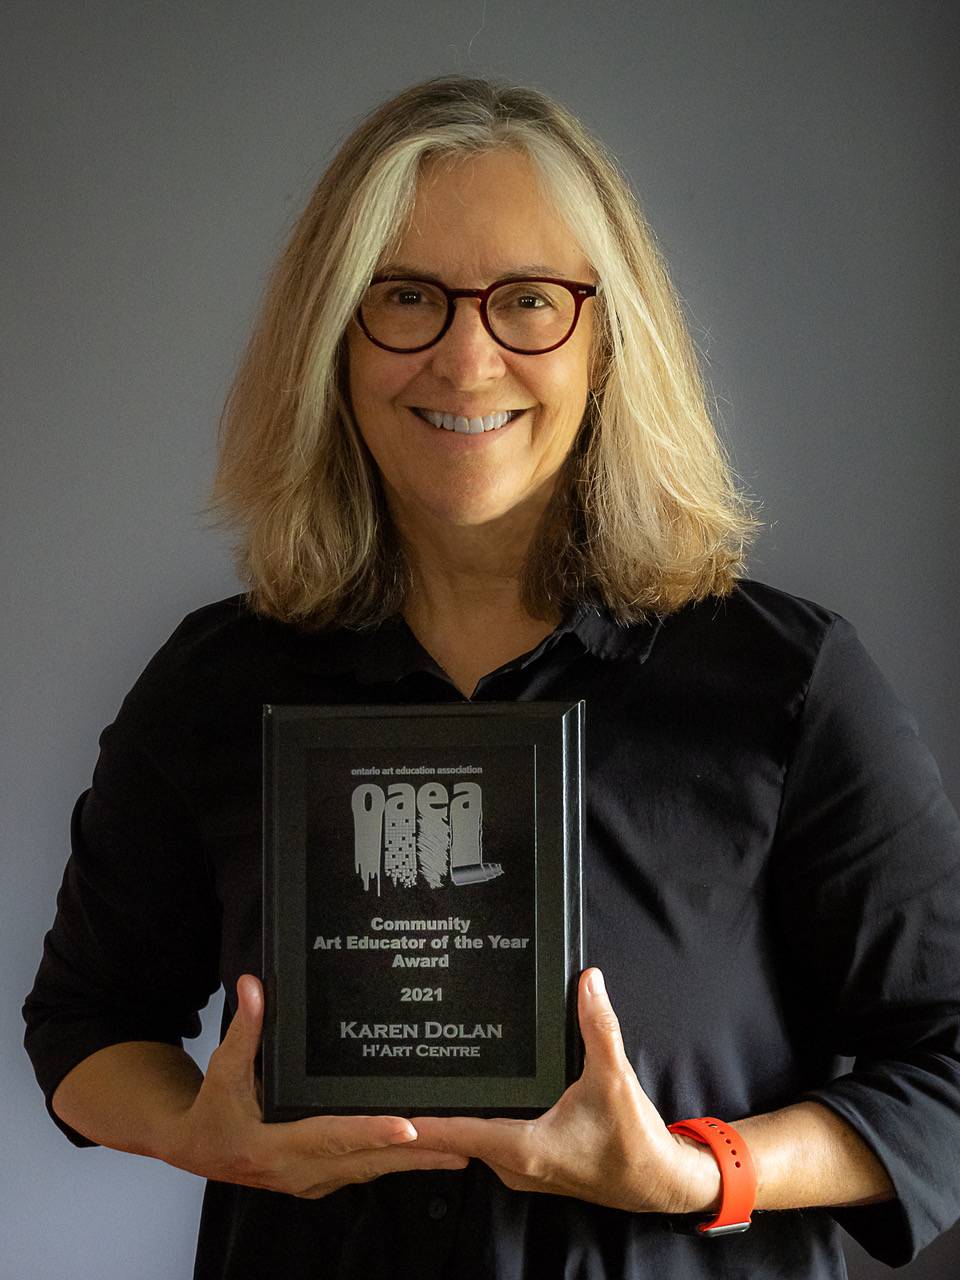 Karen Dolan holding the award plaque